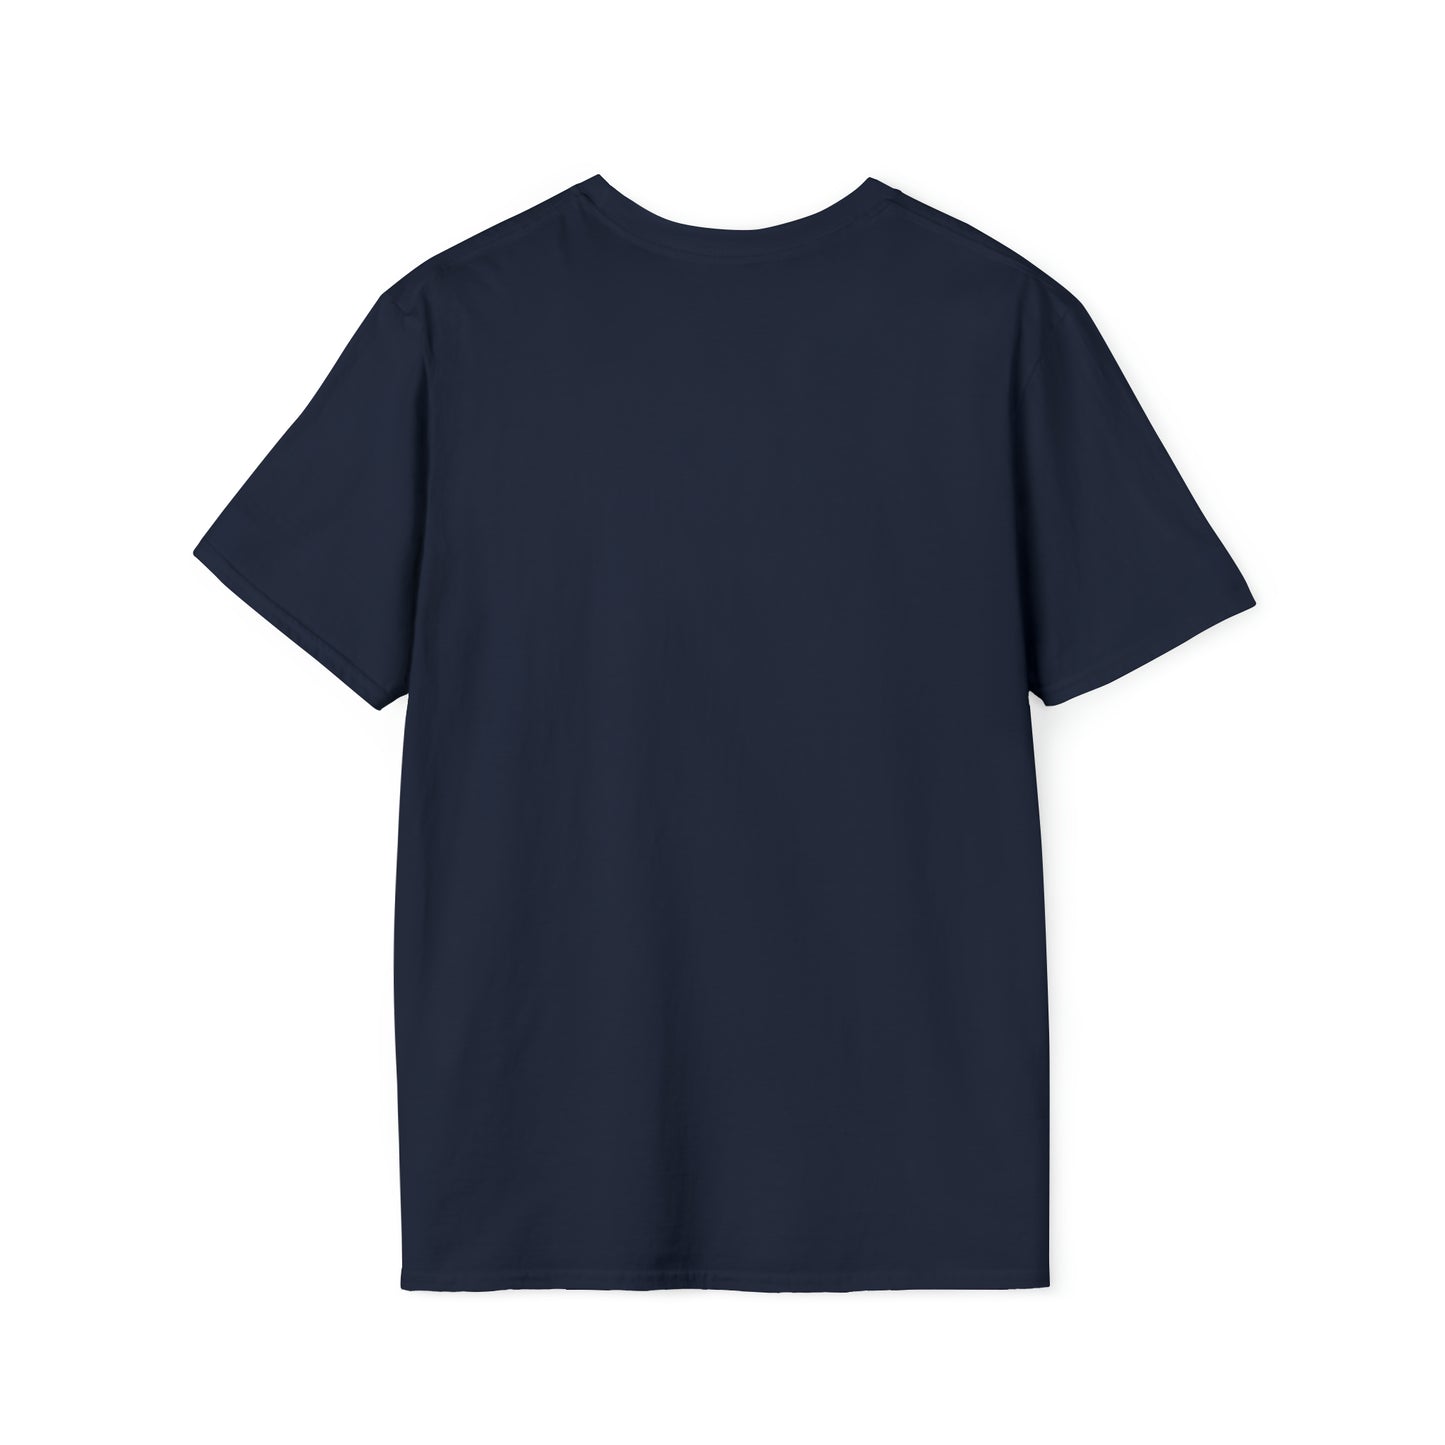 JUST Keep Moving Forward - Unisex Softstyle T-Shirt